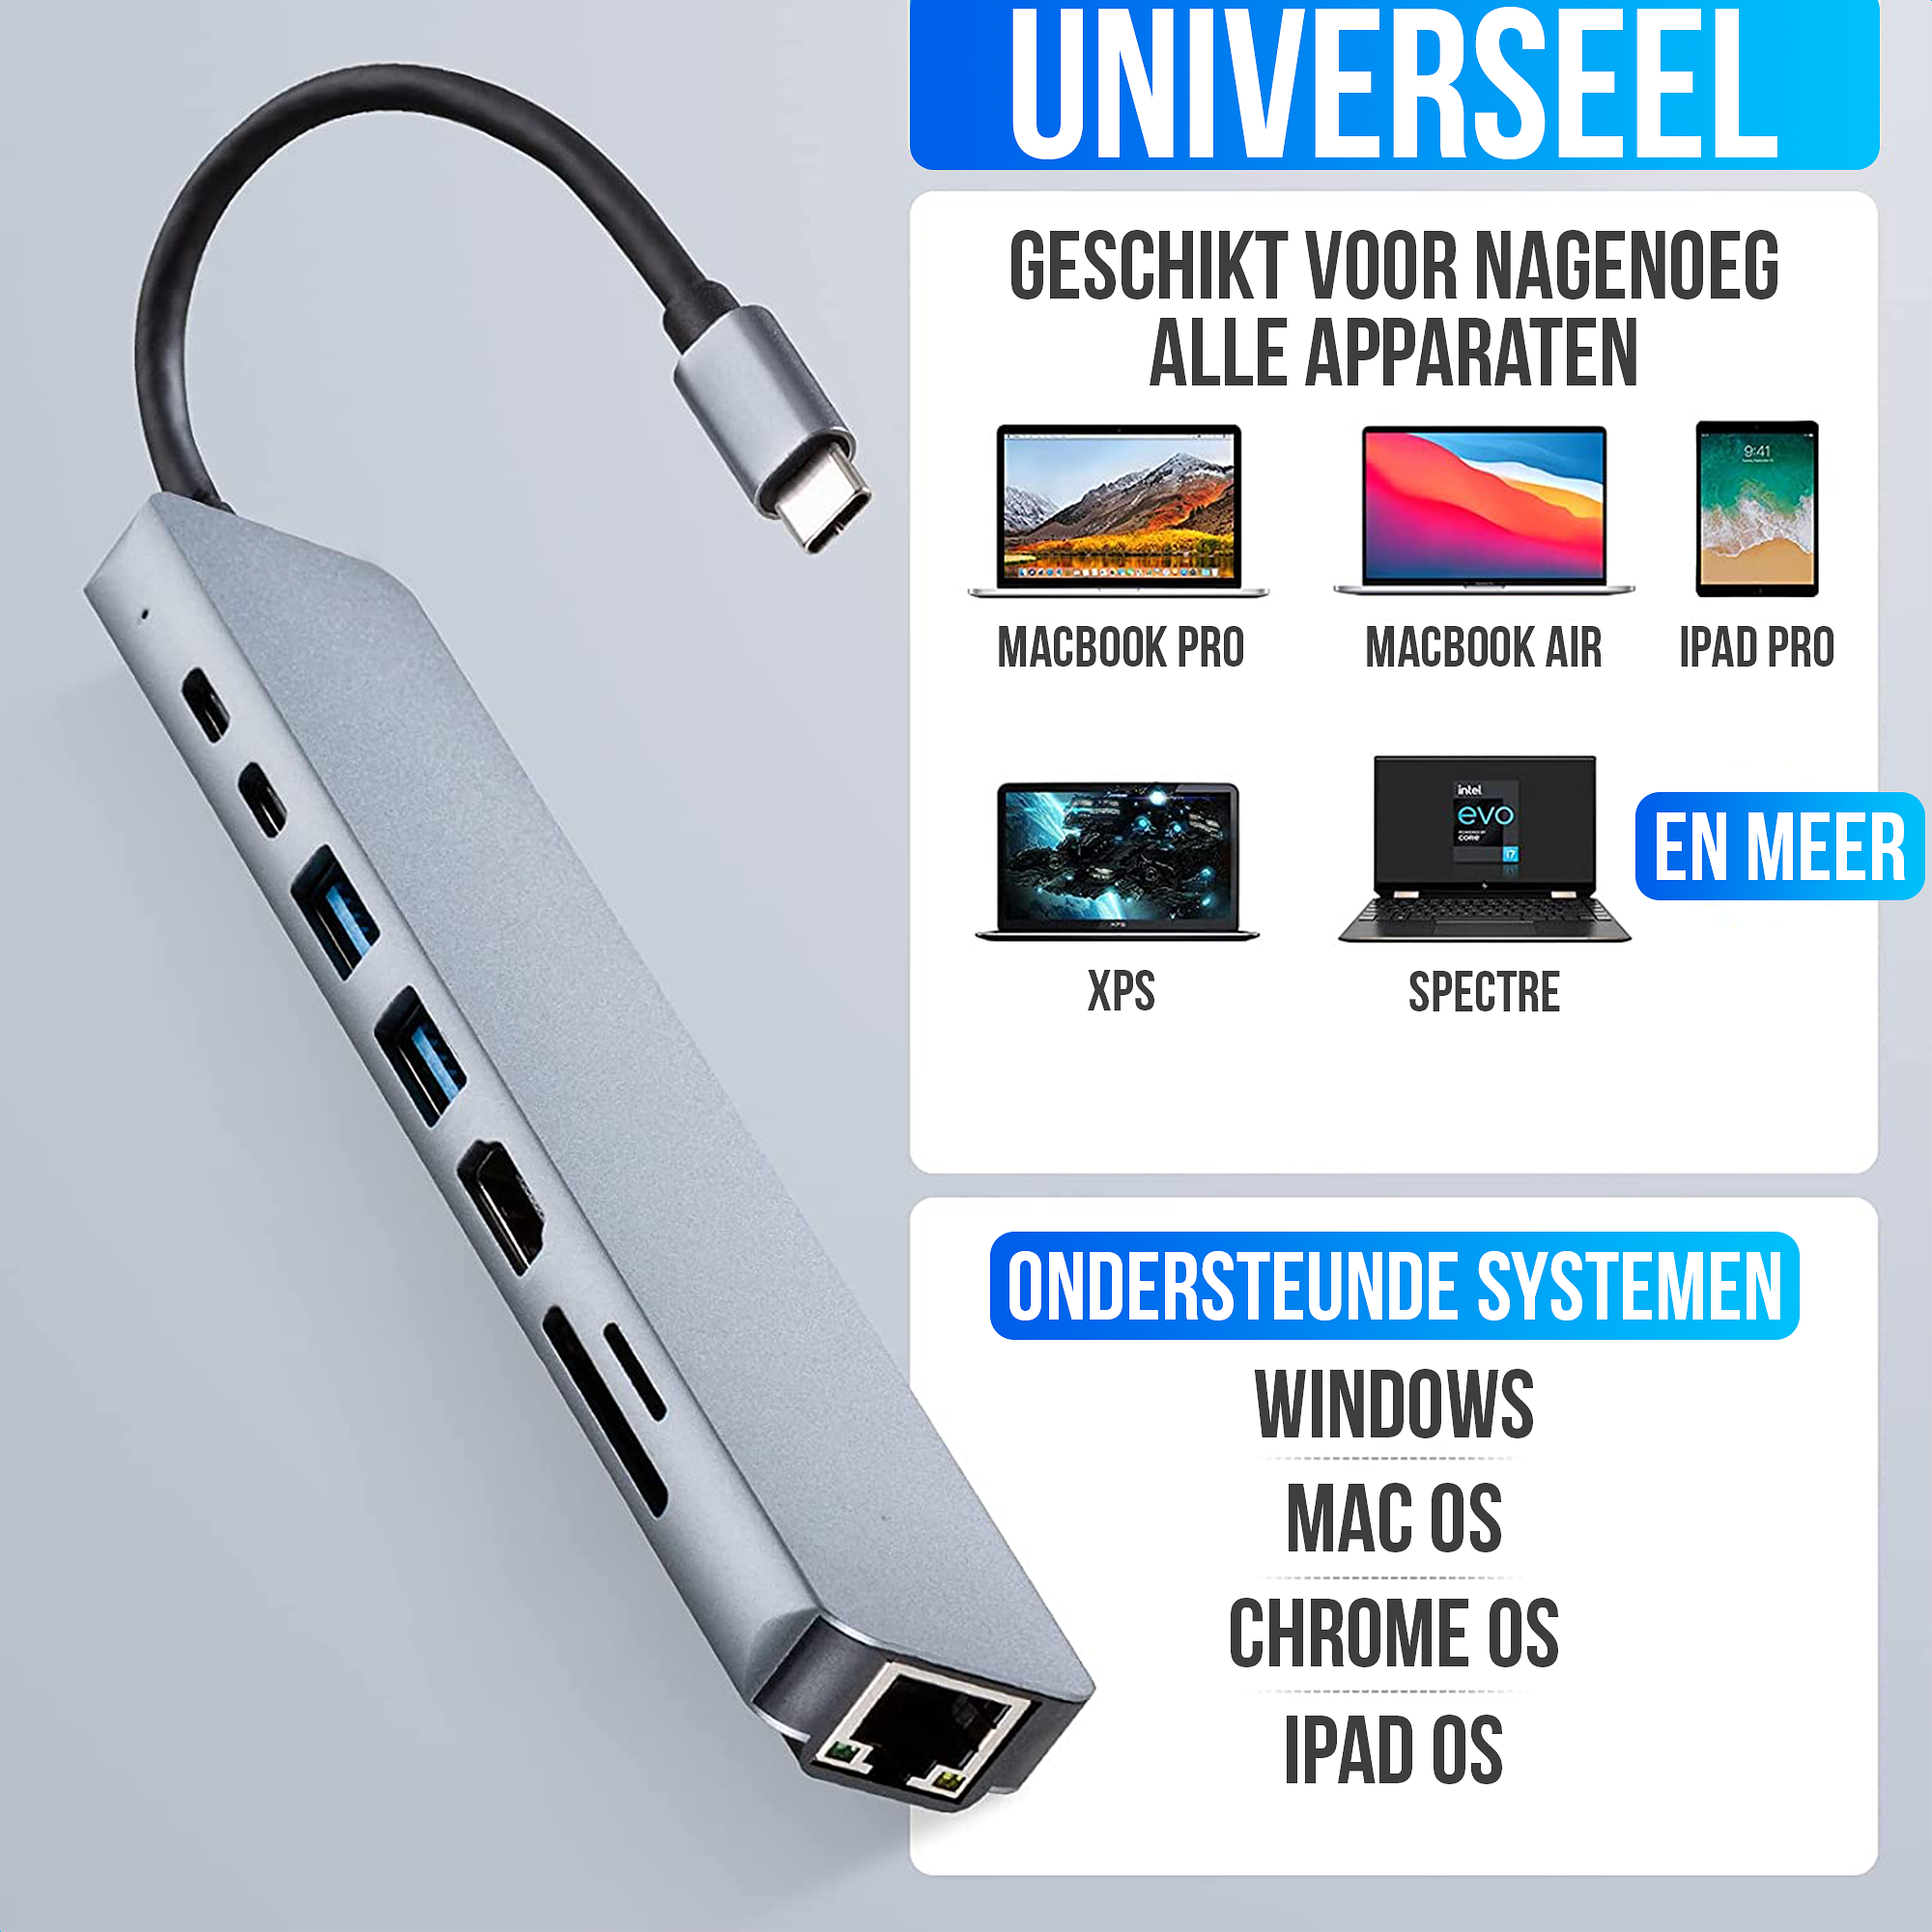 Strex 8 in 1 USB C Hub - Docking Station - USB Splitter - 4K HDMI - USB A - USB C - Ethernet - Micro